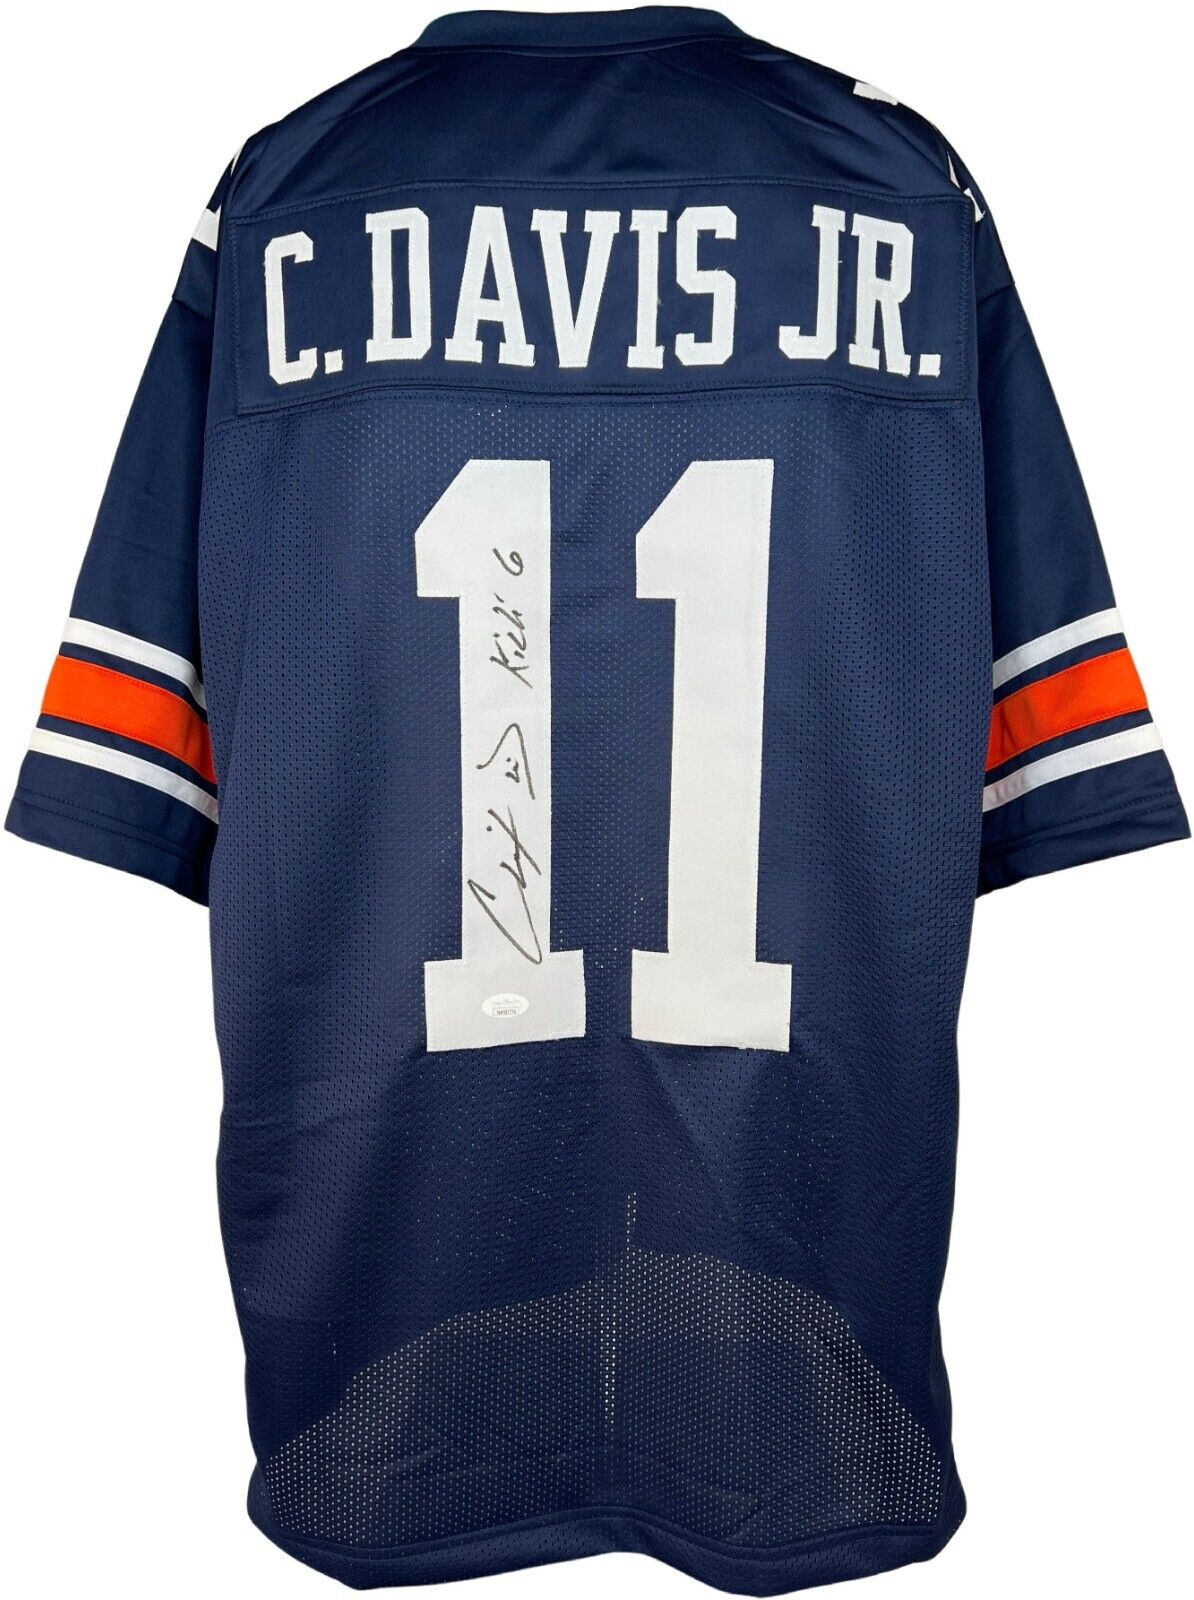 Chris Davis Jr autographed signed inscribed jersey NCAA Auburn Tigers PSA COA